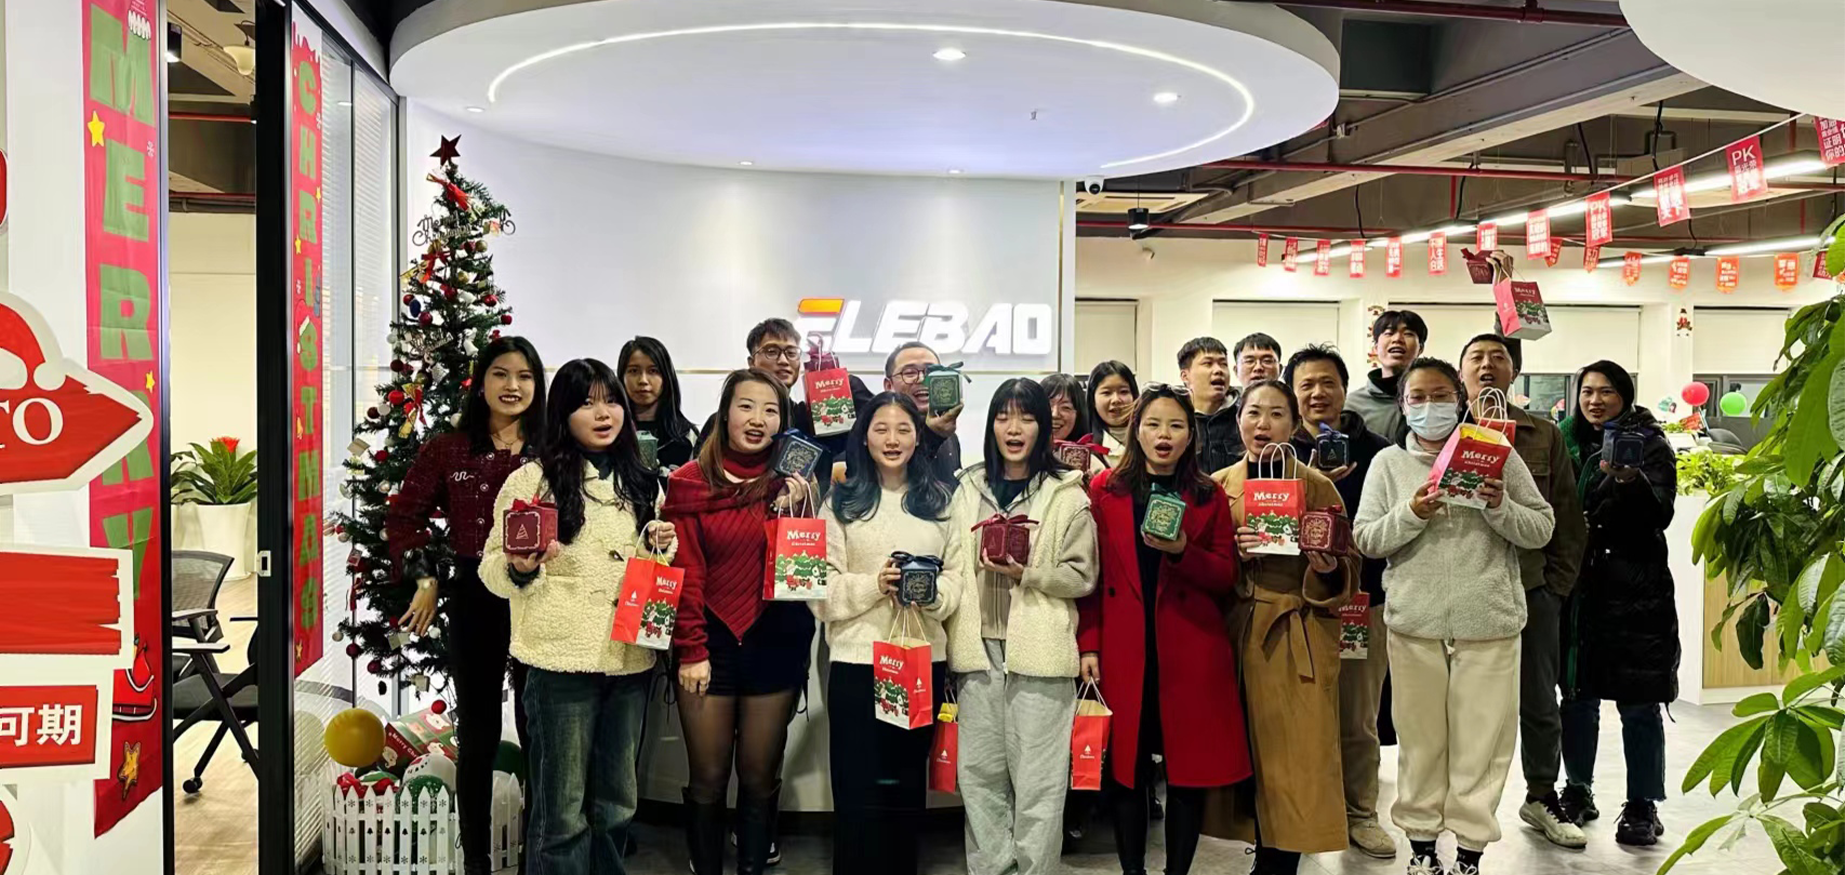 ELEBAO Company Winter Solstice and Christmas Event: Building Team Strength Through Joyful Interaction